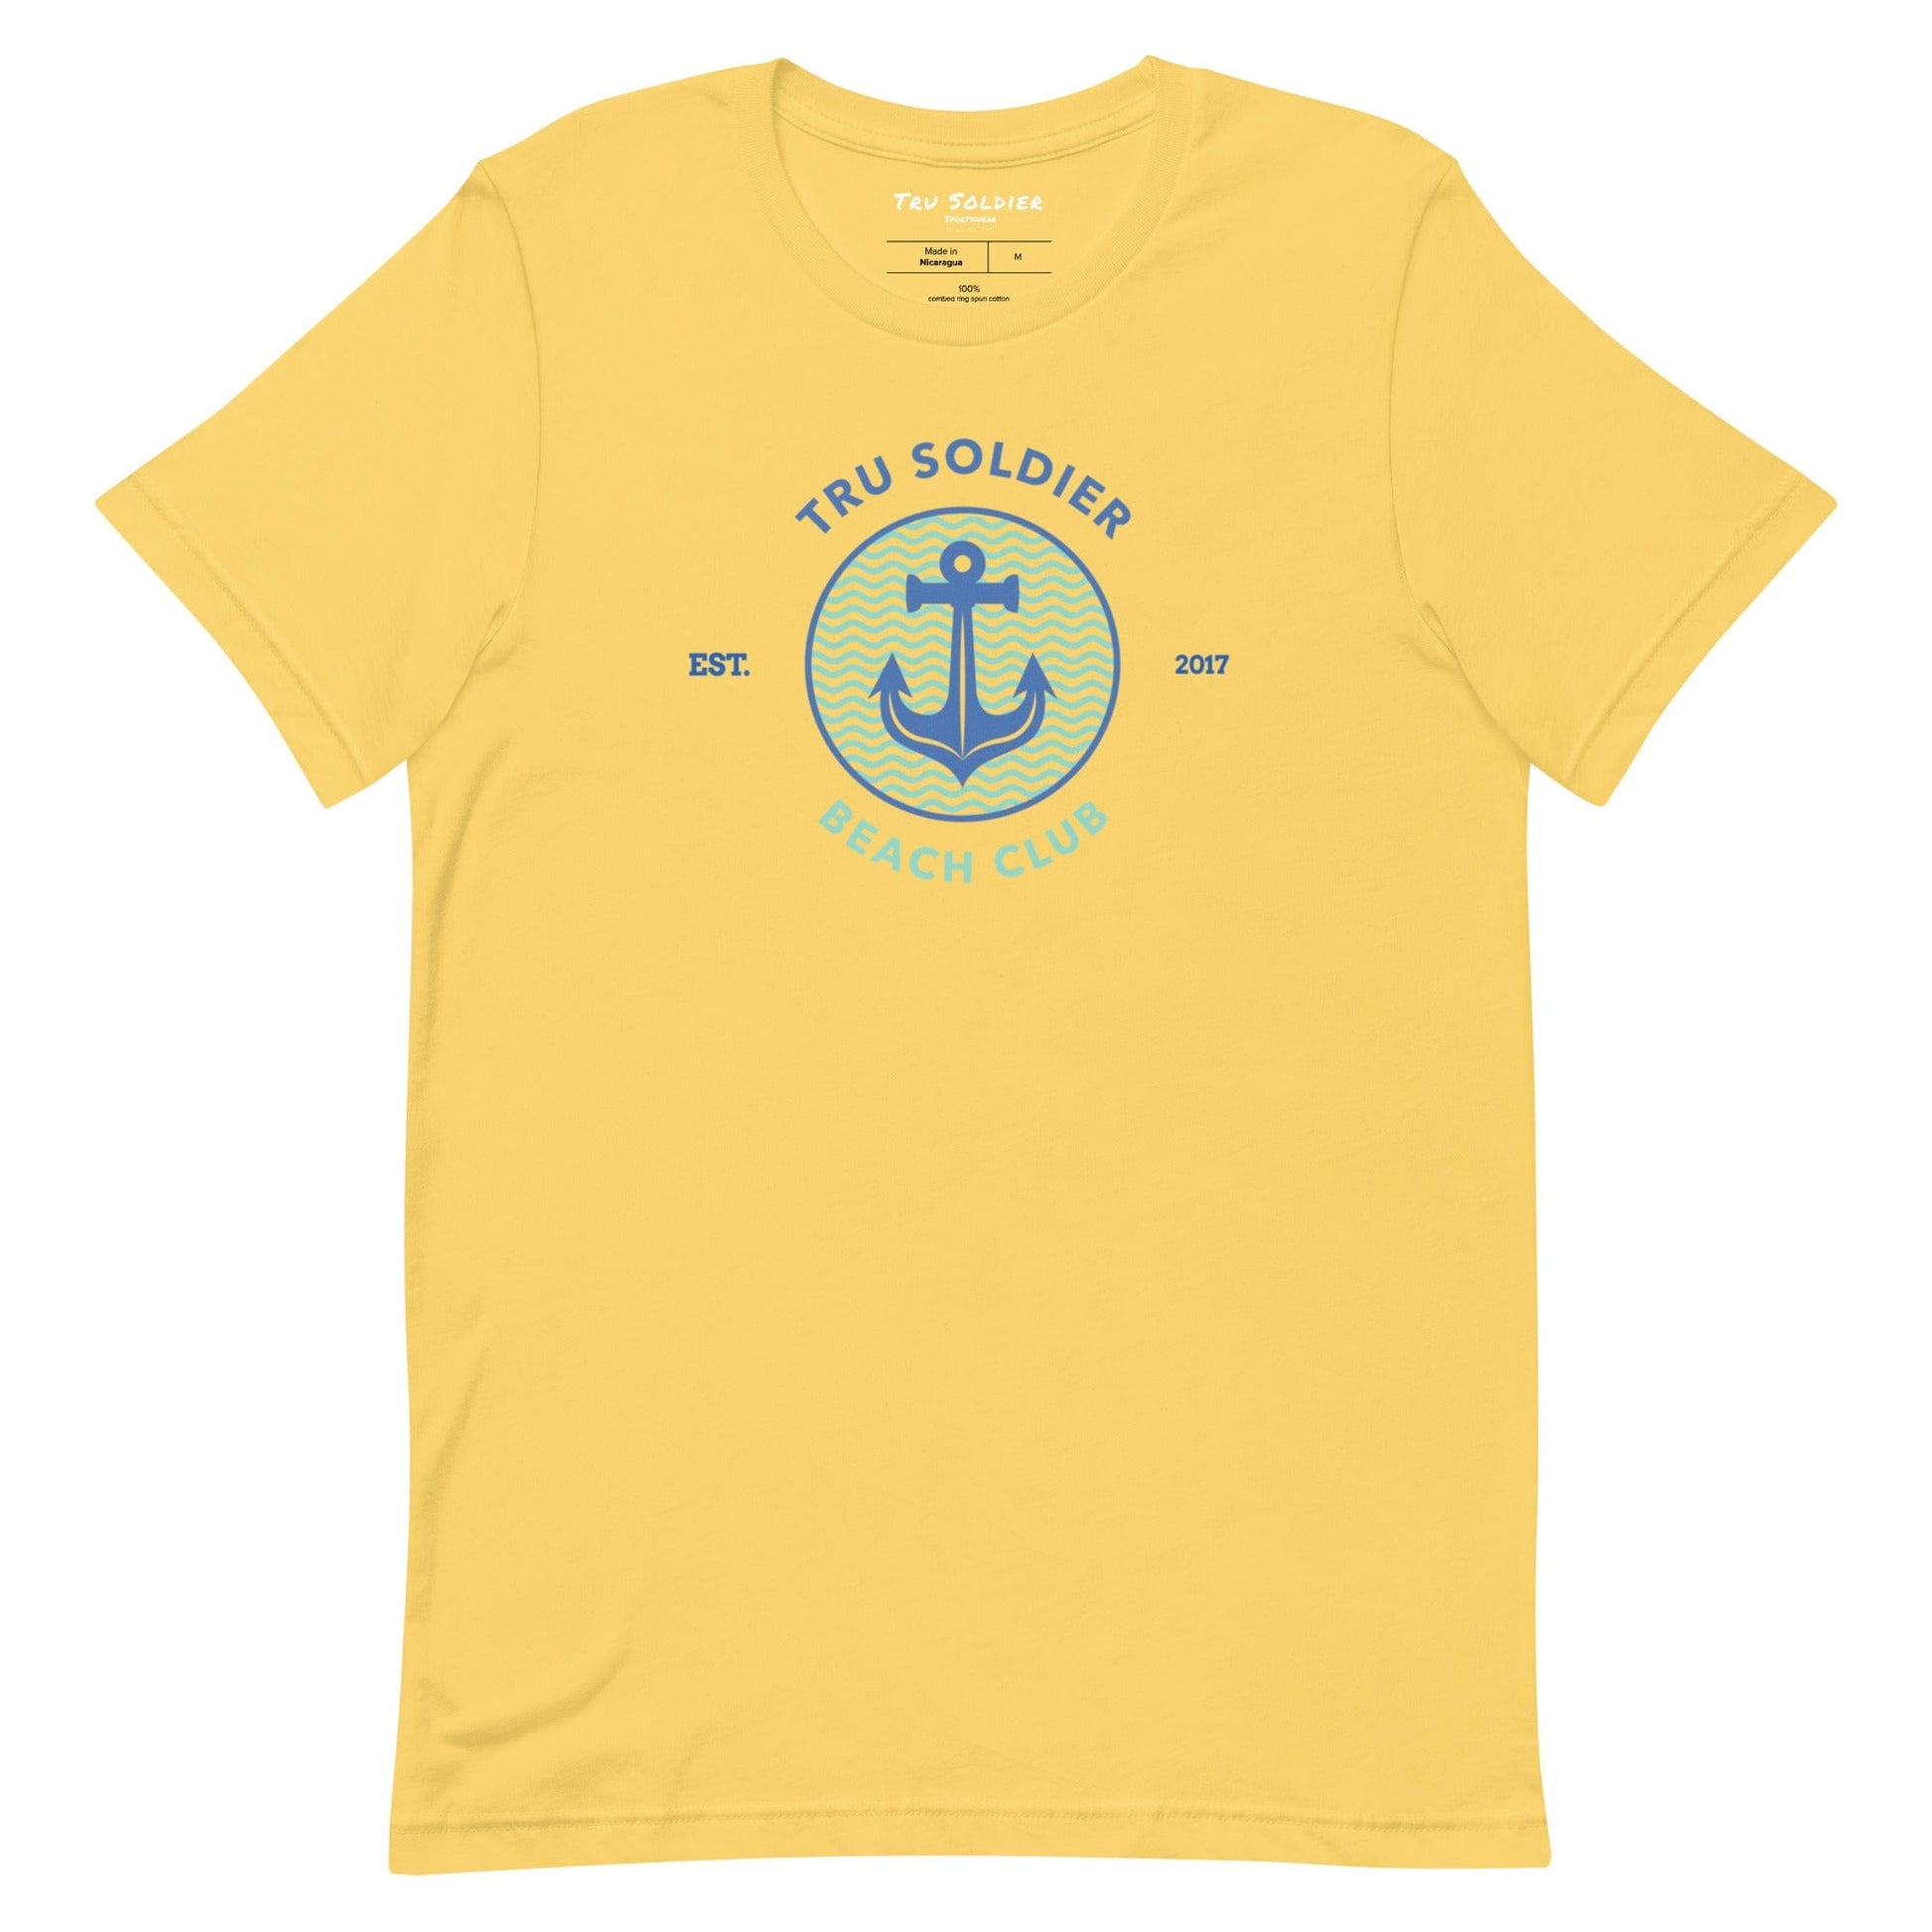 Tru Soldier Sportswear  Yellow / S Tru Soldier Beach Club t-shirt